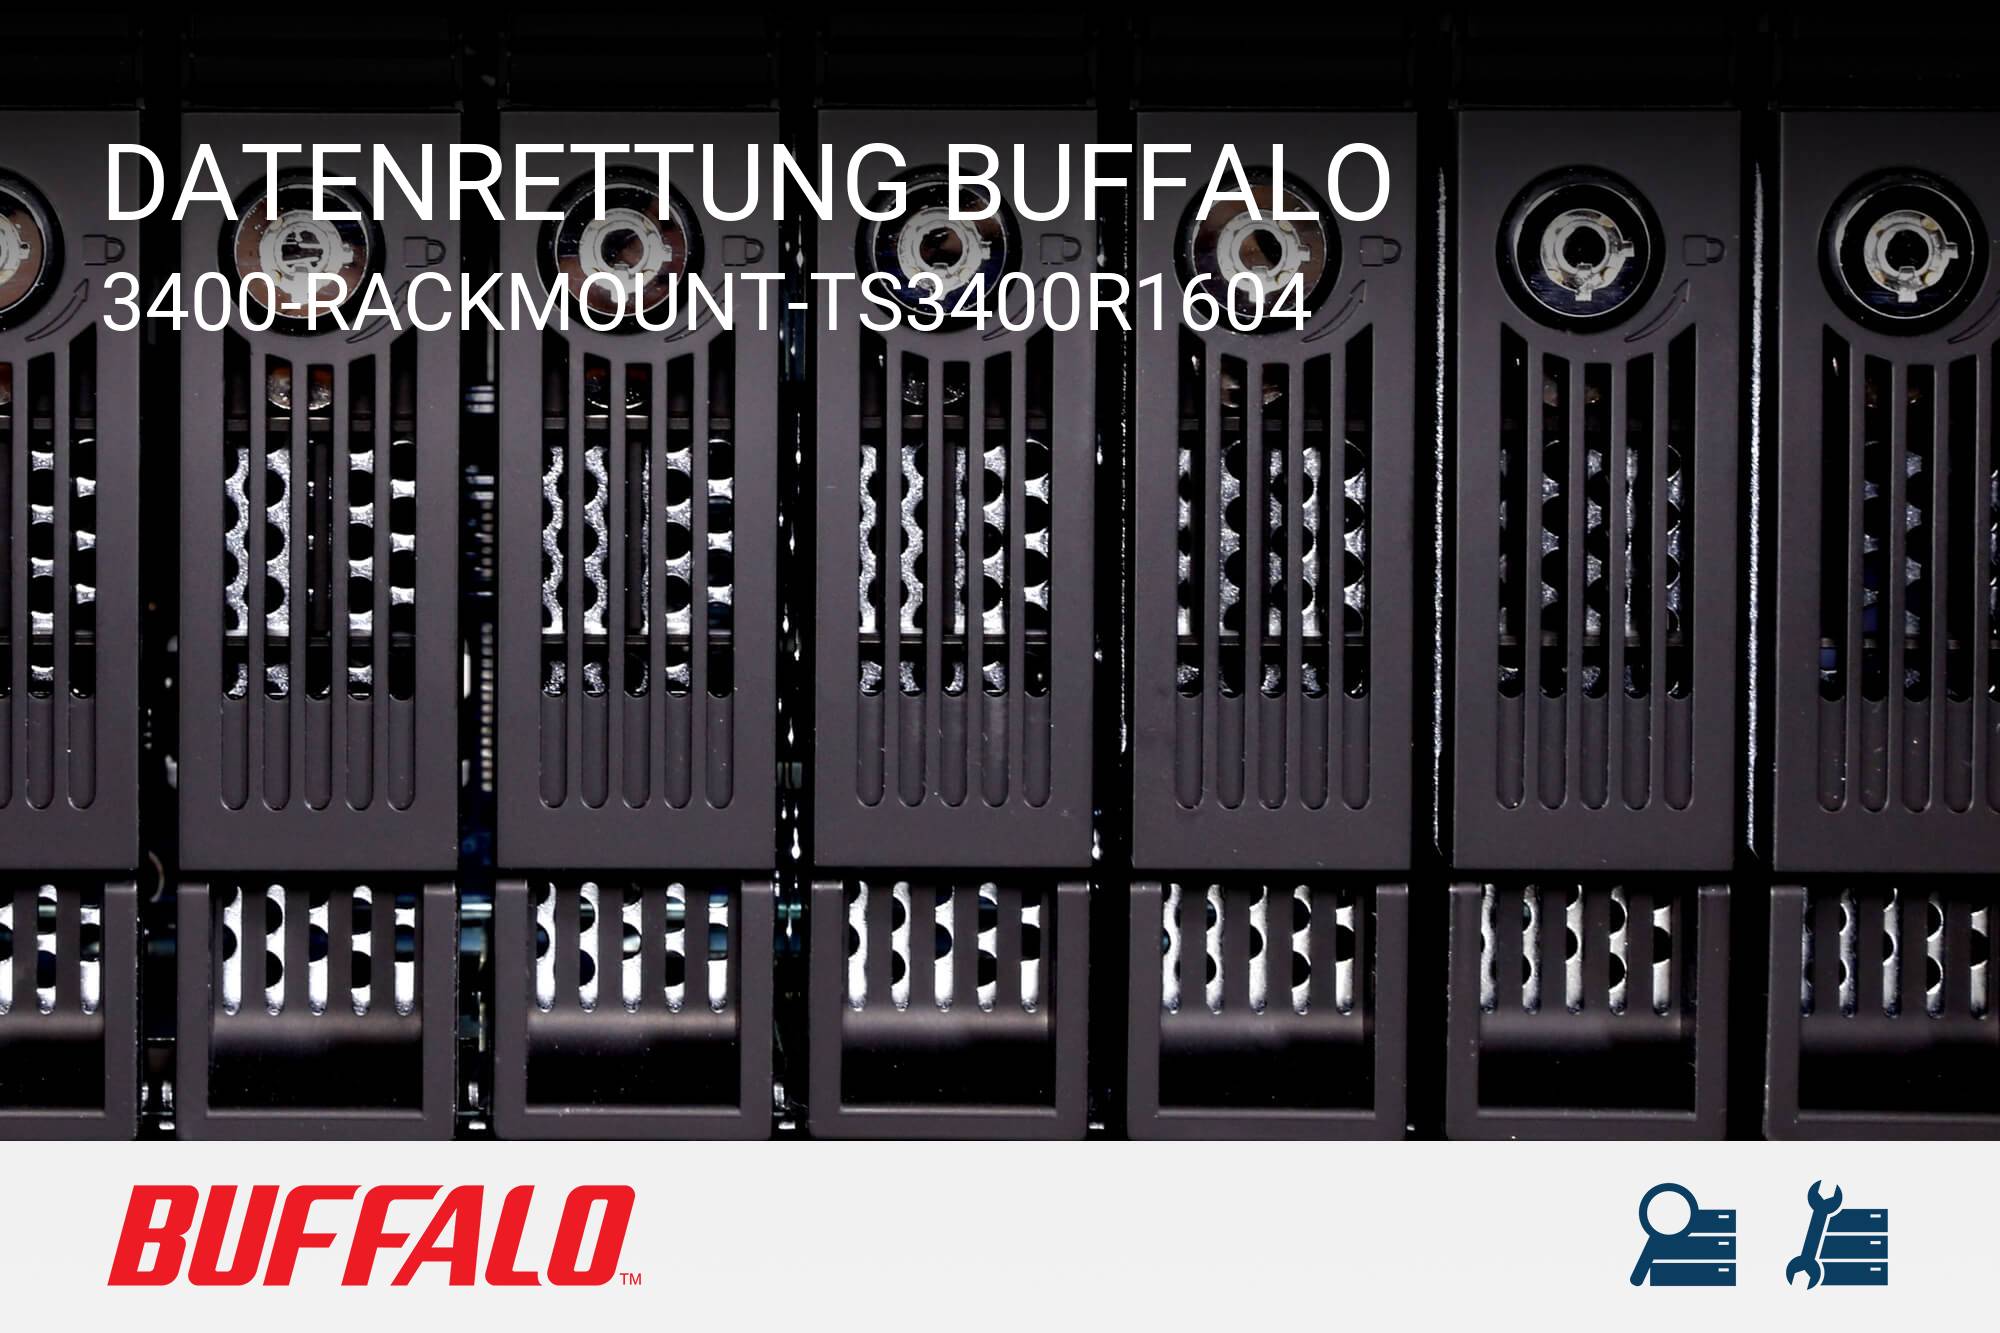 Buffalo 3400-Rackmount-TS3400R1604